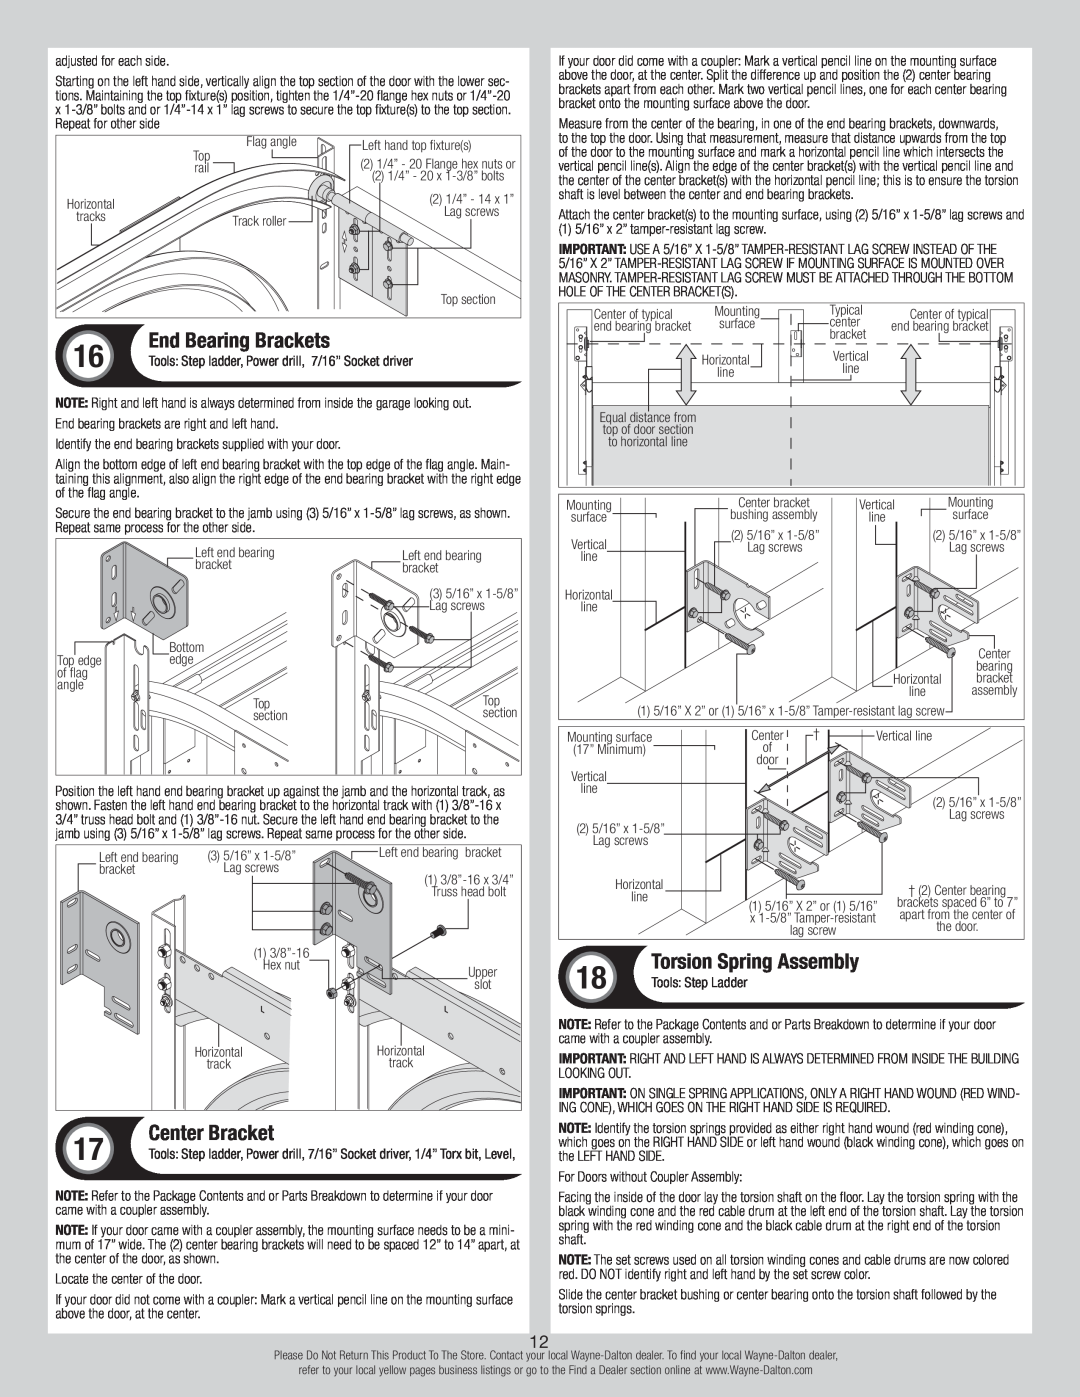 Wayne-Dalton 347610 installation instructions End Bearing Brackets, Center Bracket, Torsion Spring Assembly 